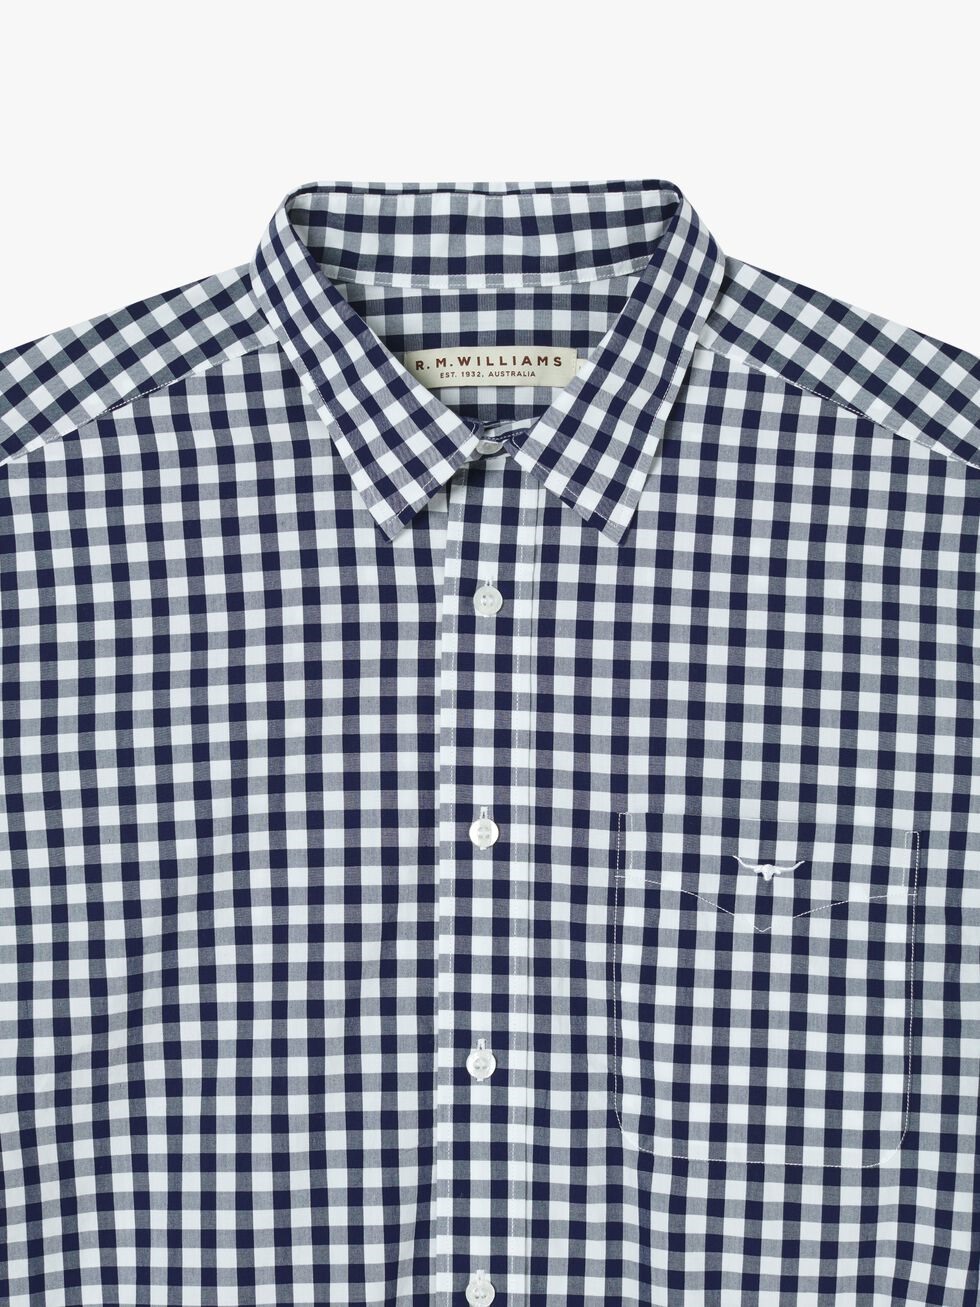 RM Williams Hervey Shirt - Navy/White Check | Port Phillip Shop